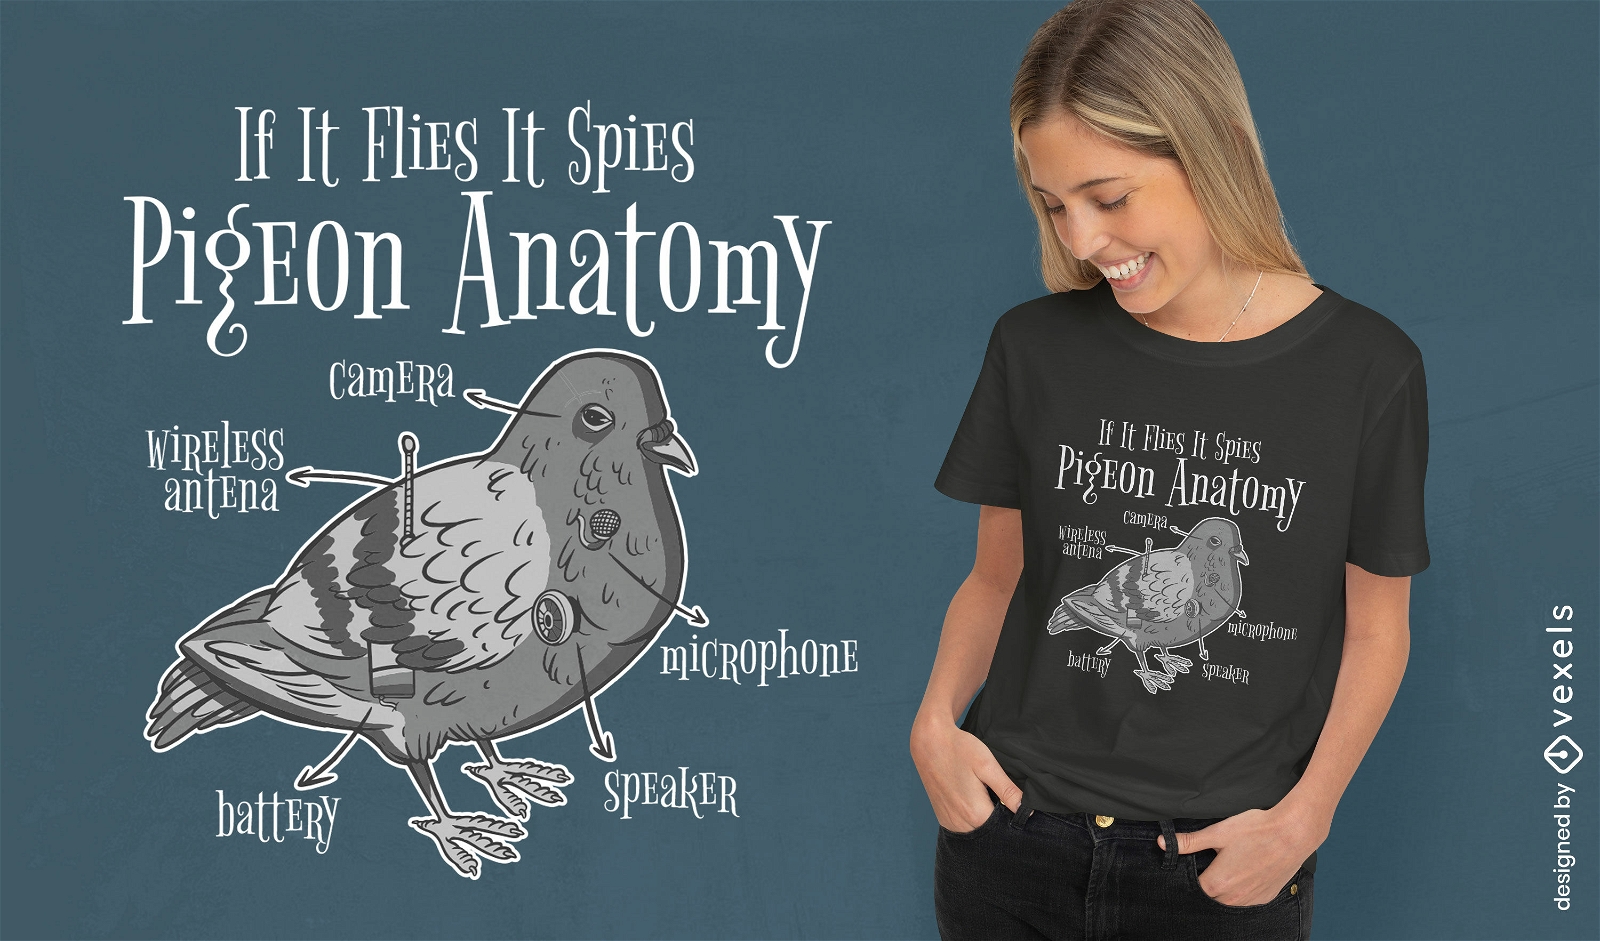 Pigeon anatomy t-shirt design